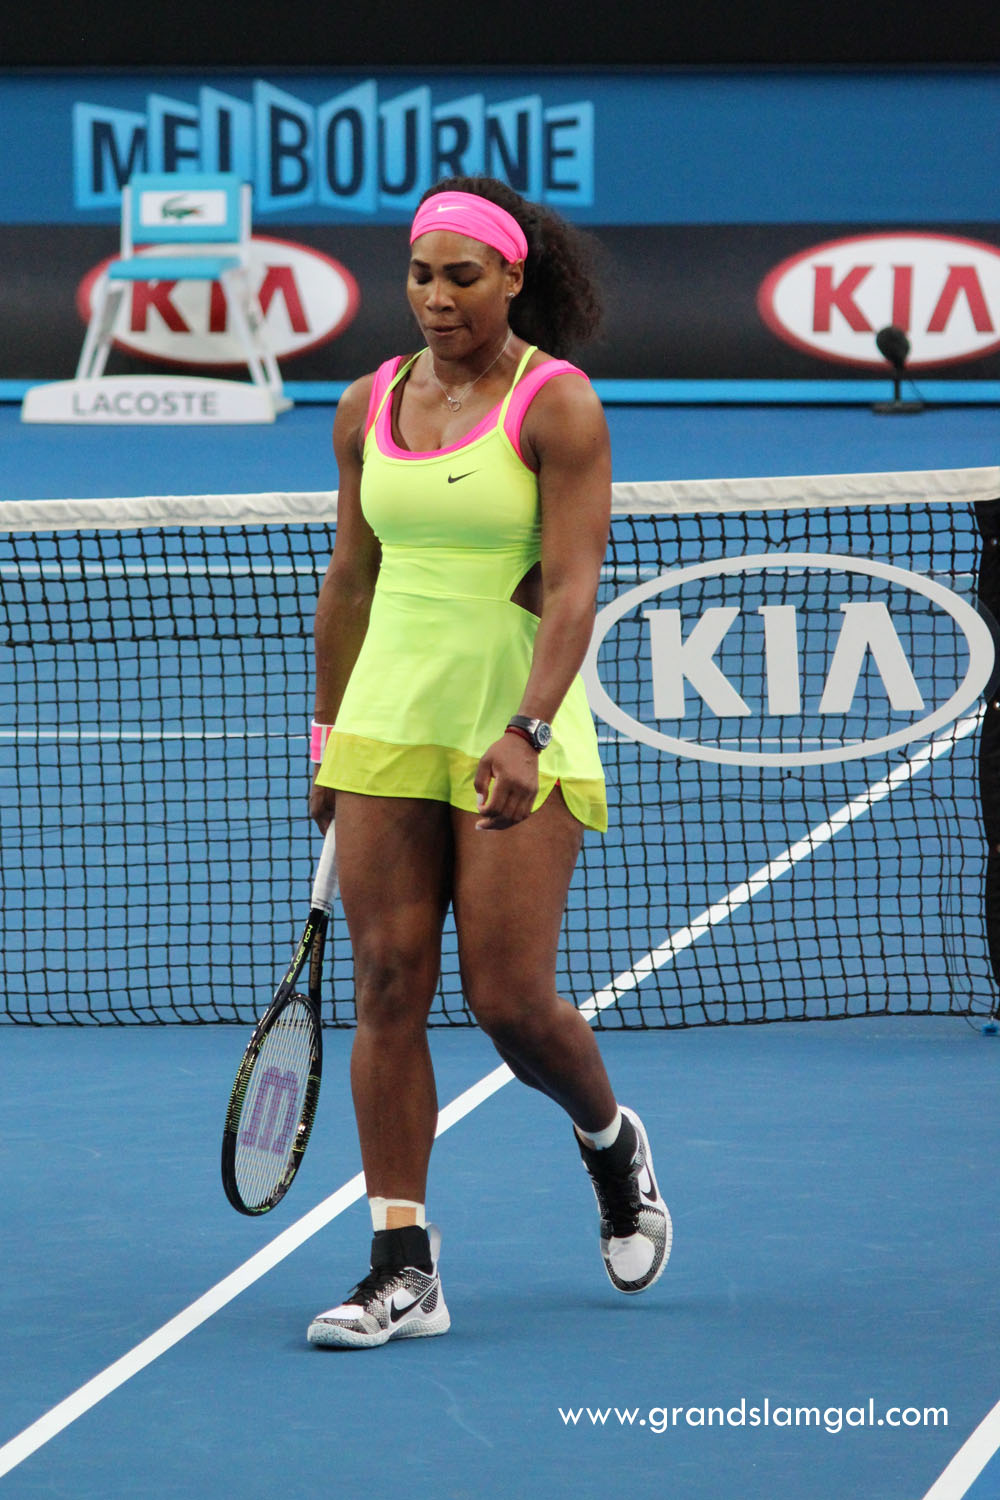 Samenpersen bonen Boekwinkel Serena Williams' Australian Open 2015 Pink and Yellow Nike Outfit